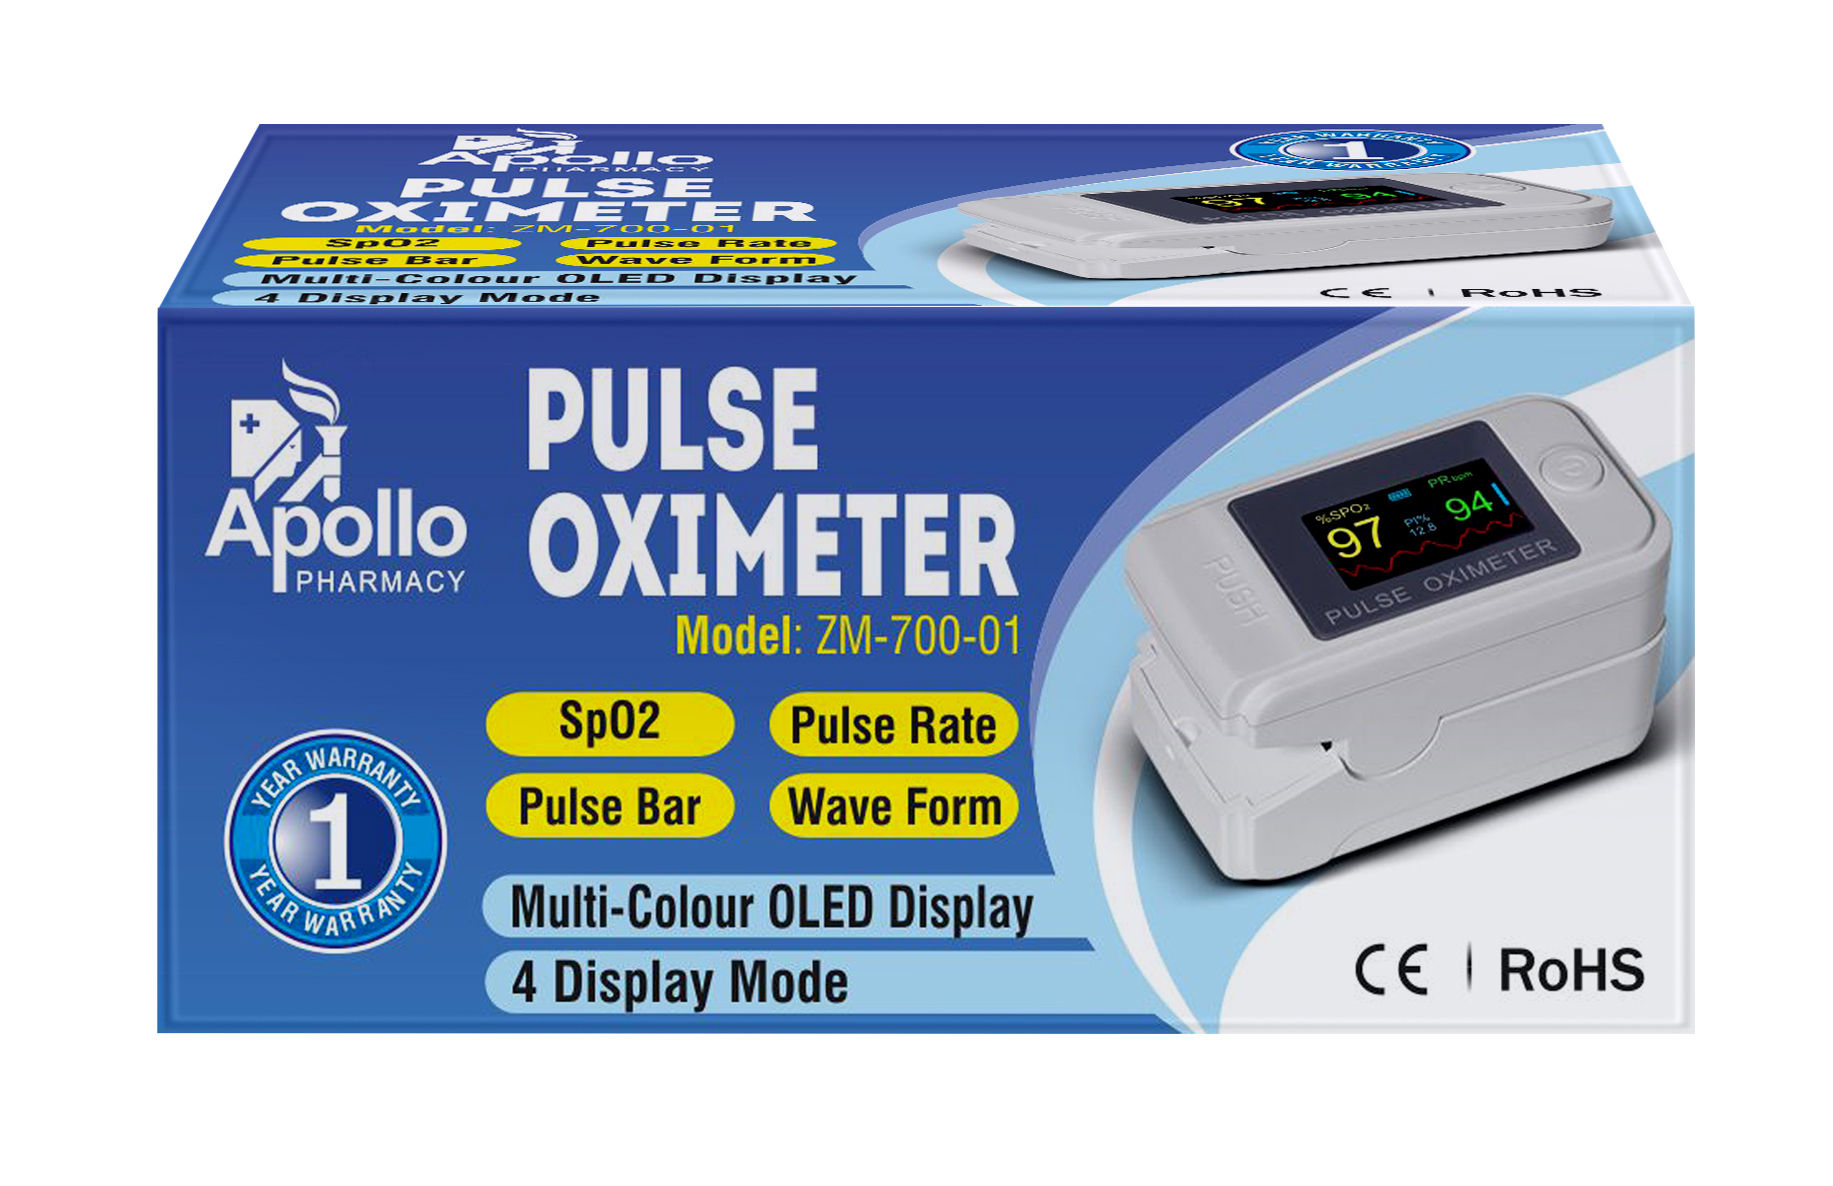 Apollo Pharmacy Pulse Oximeter ZM-700-01, 1 Count, Pack of 1 